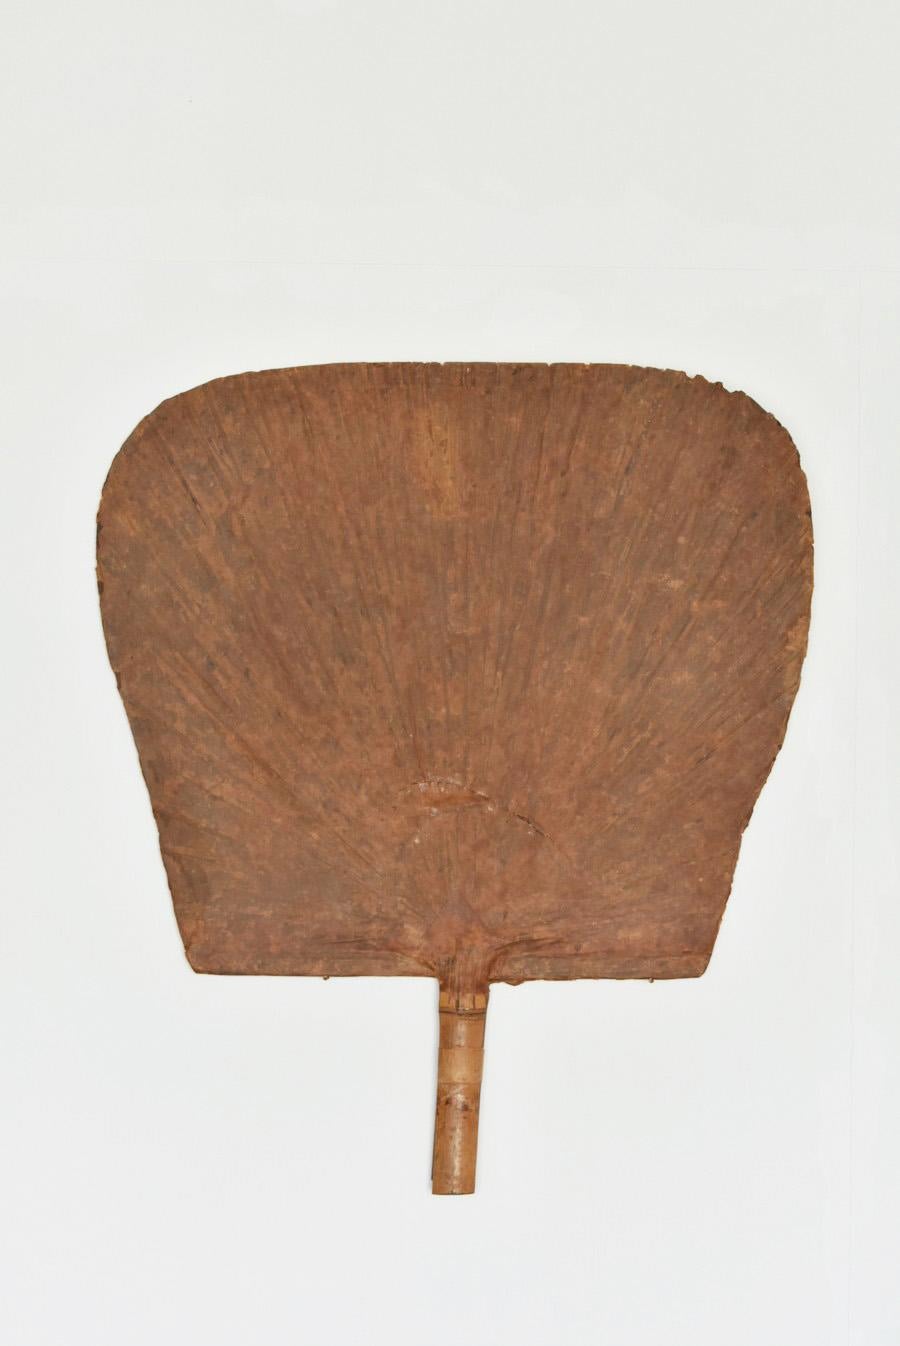 20th Century Very rare Korean antique fan made of bamboo and paper/like Ingo Maurer's Uchiwa